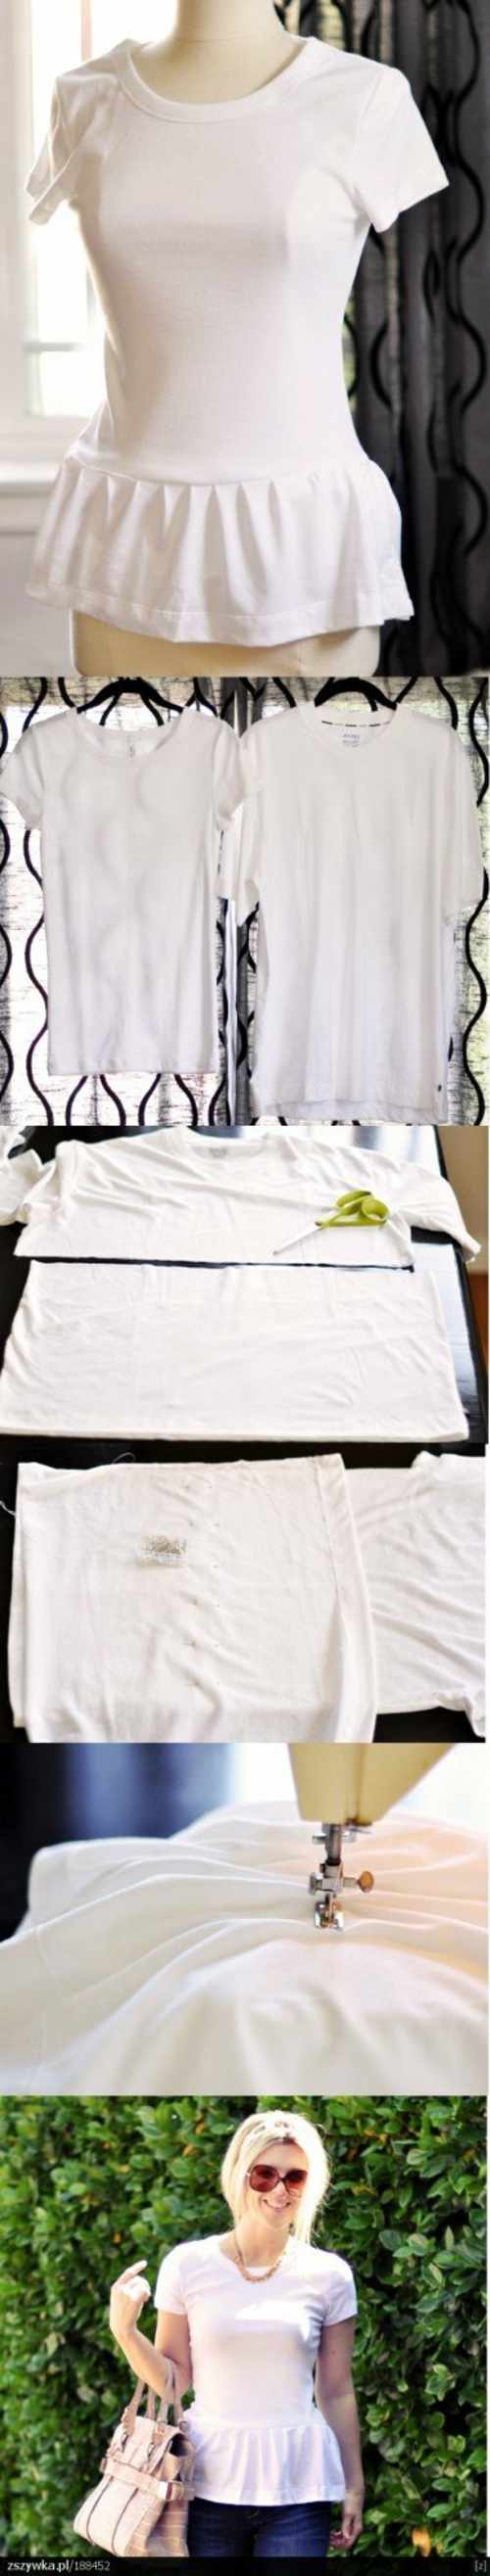 idee relooker t-shirt blanc